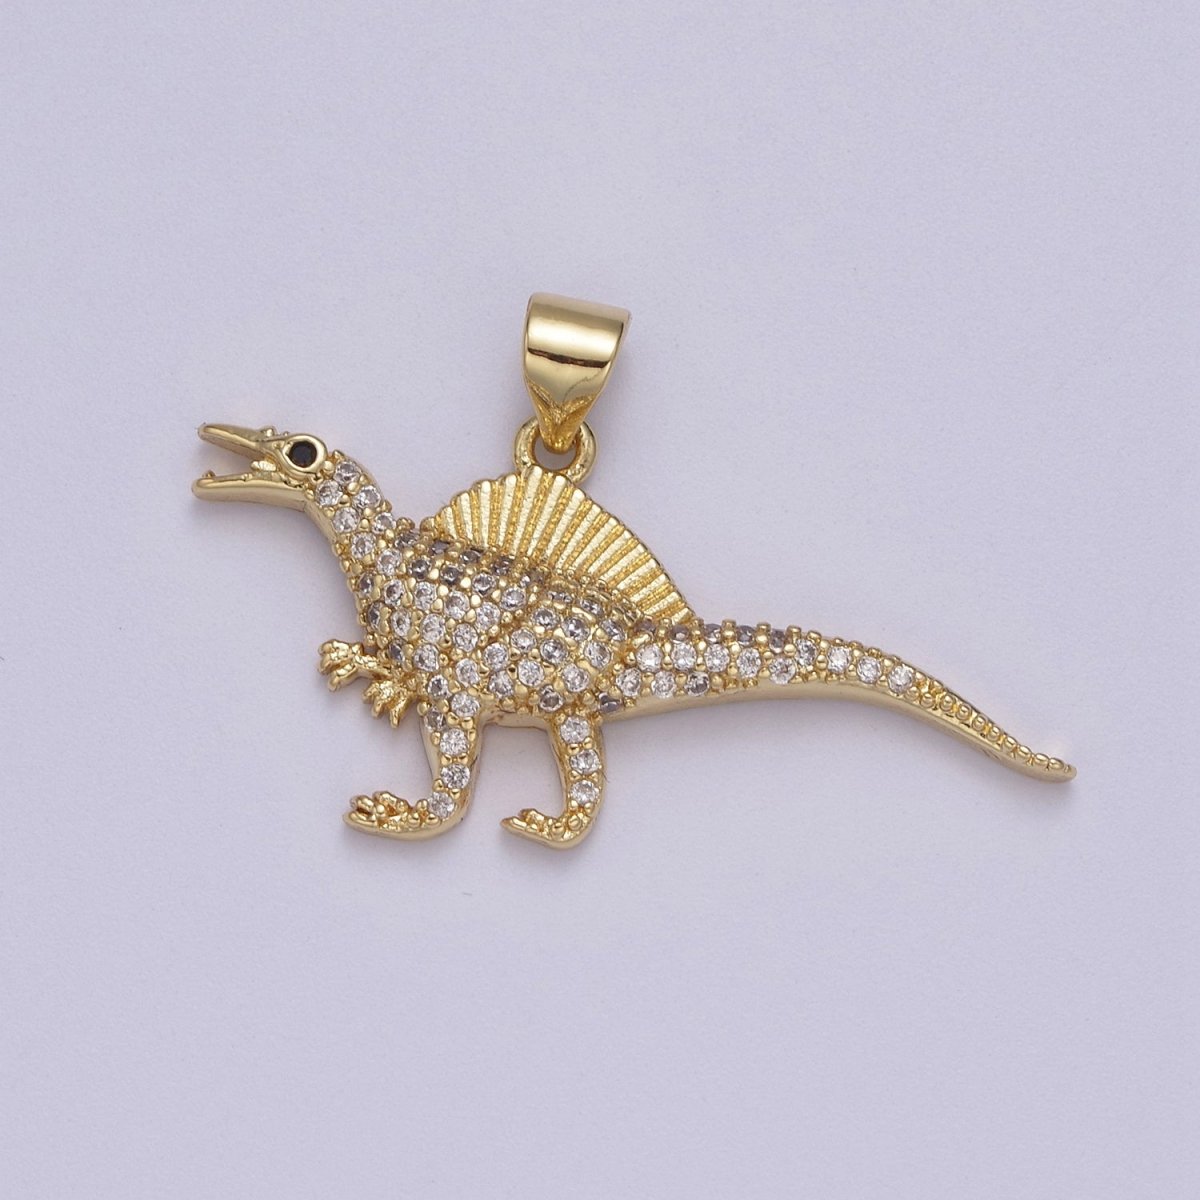 Dinosaur Pendants in Gold, Spinosaurus Charm Dino Jewelry in Clear Cubic Zirconia J-334 - DLUXCA